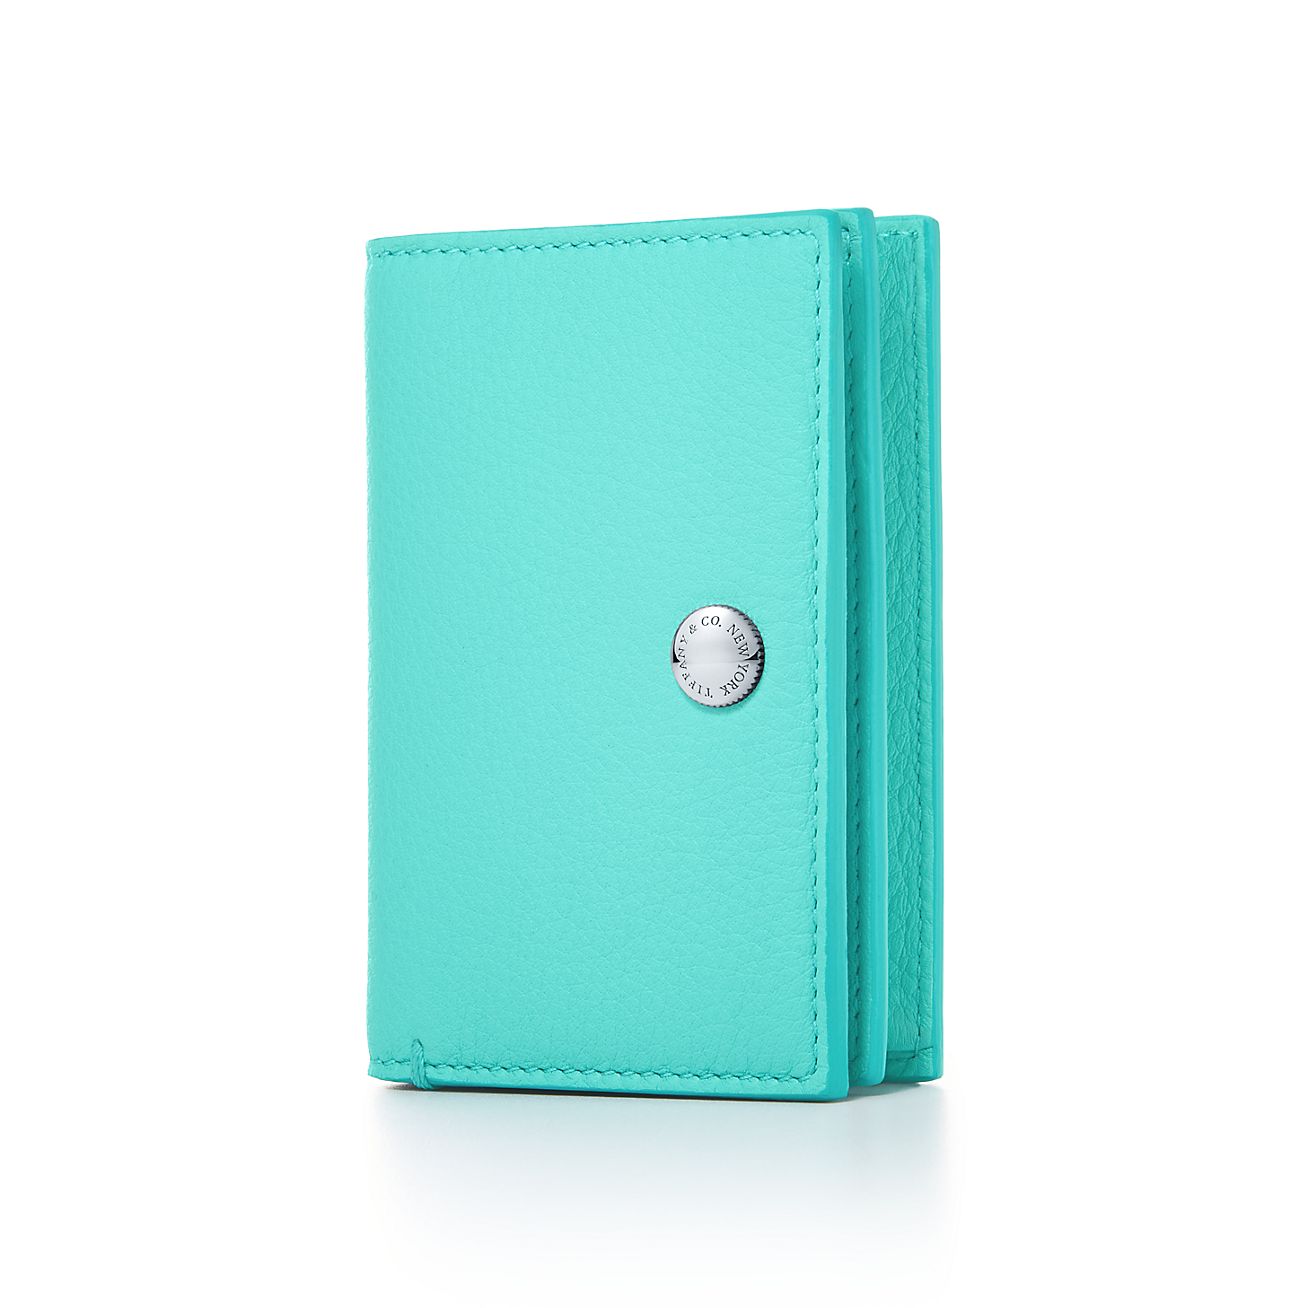 Vertical folded card case in Tiffany 